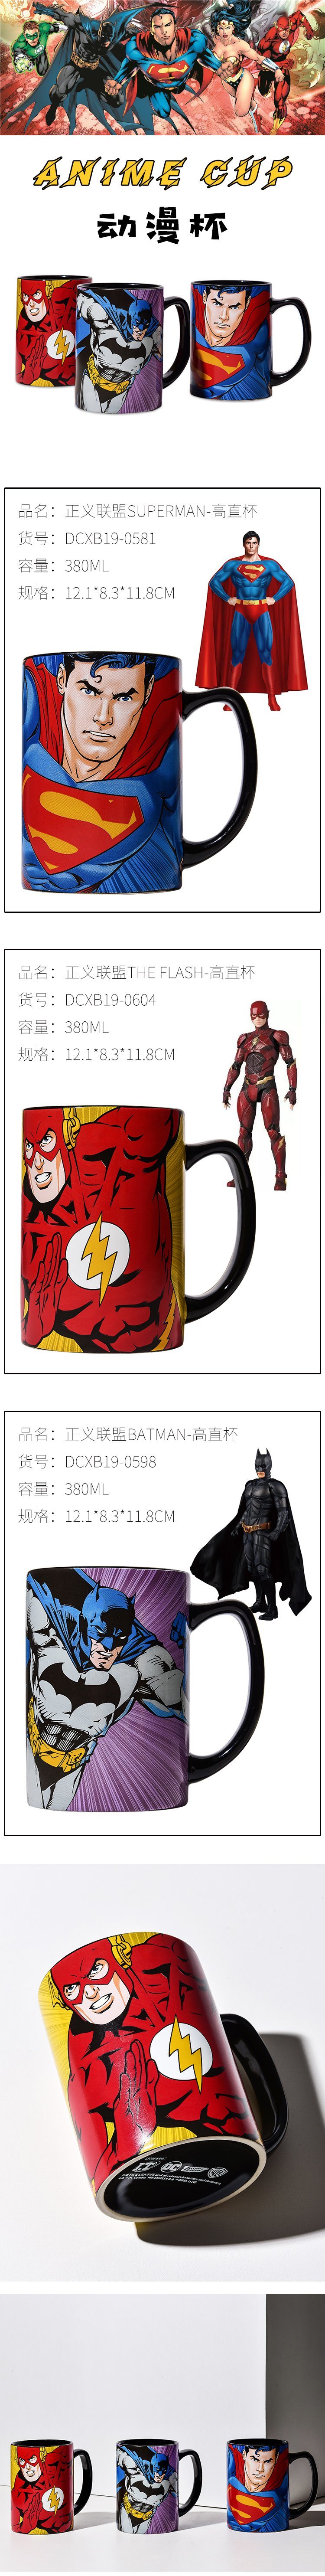 China Factory Anime Ceramic Cup Mug